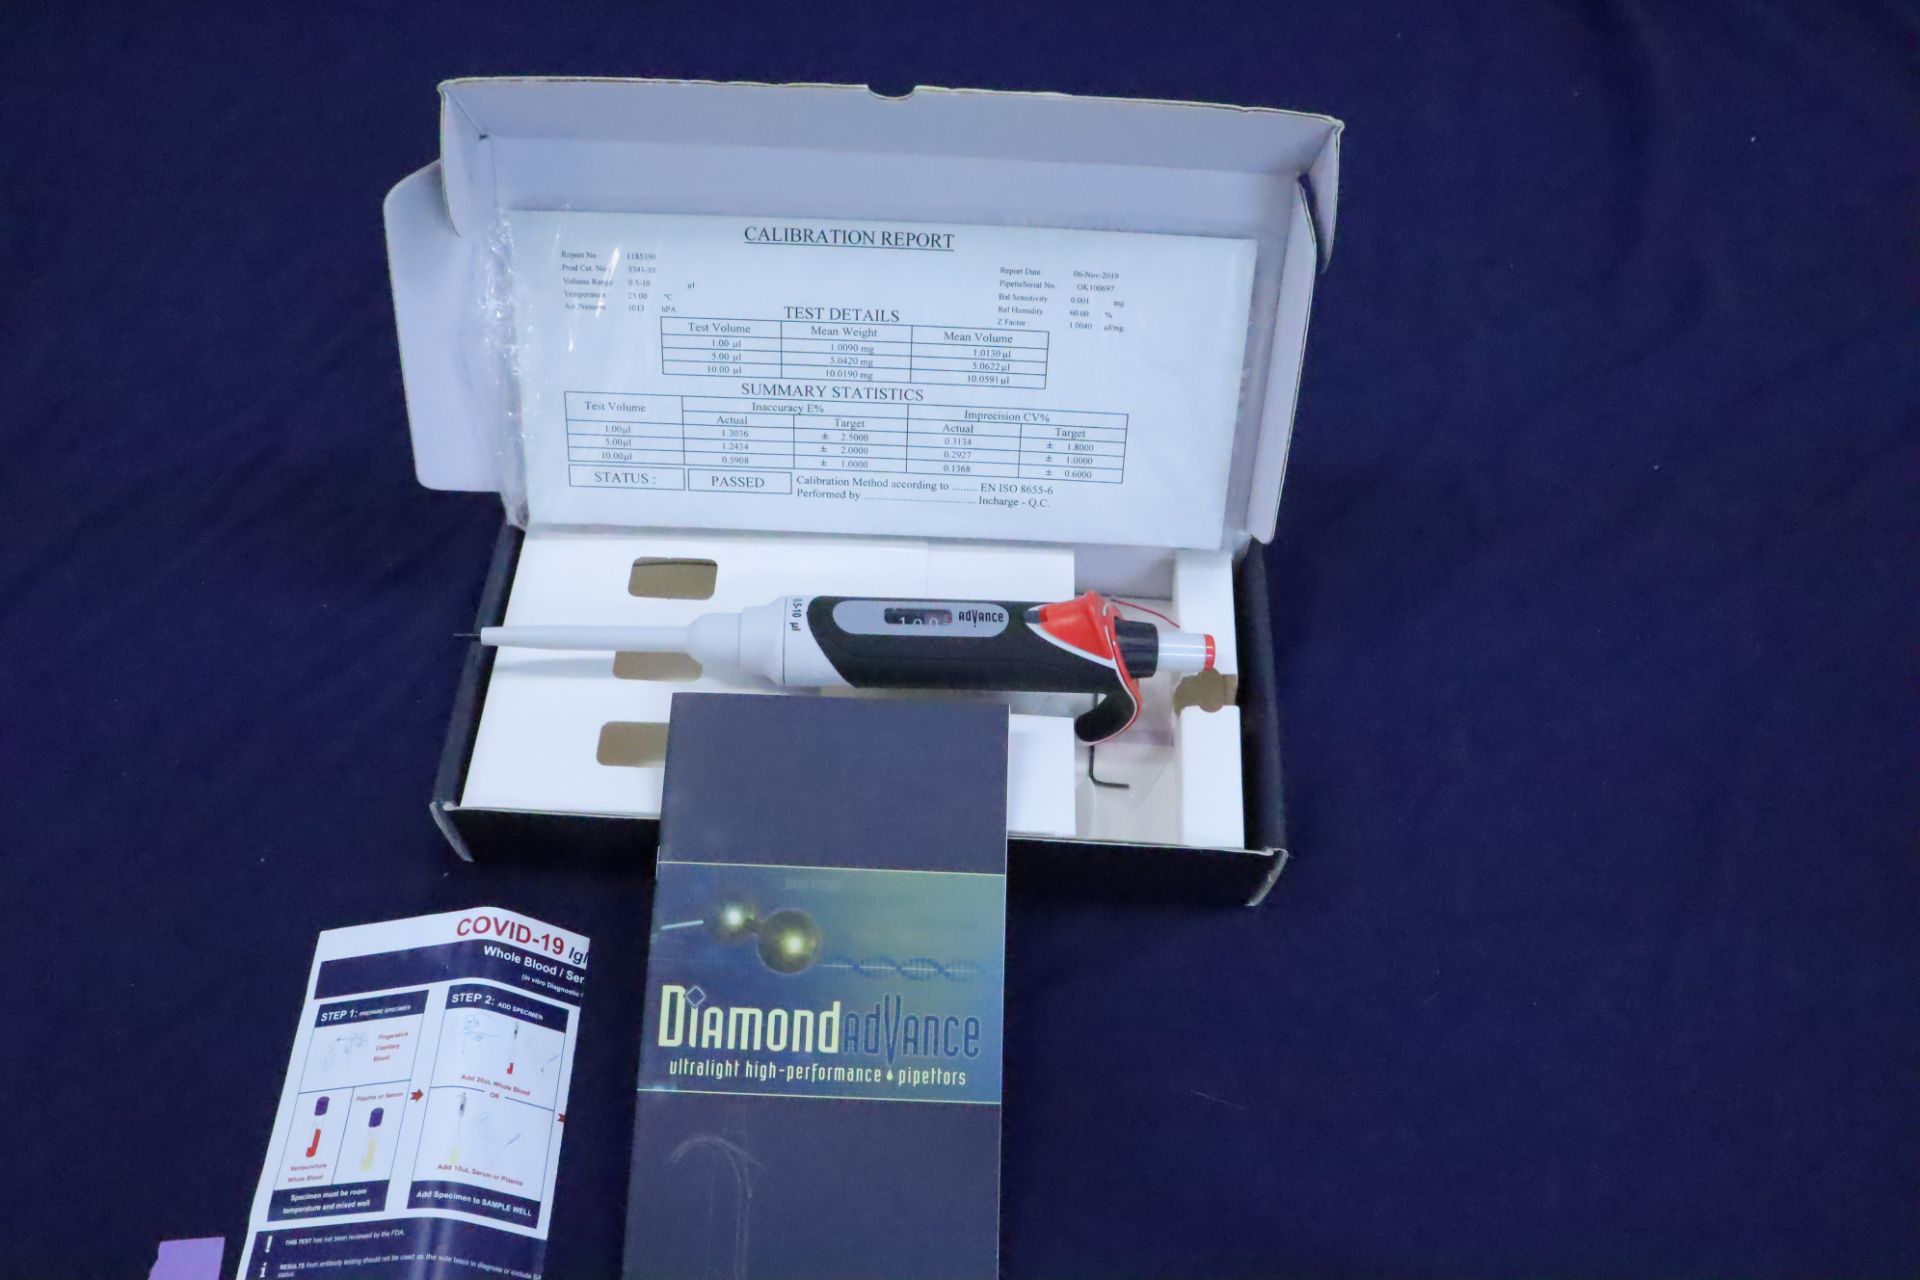 Globe Scientific Diamond Advance Pipette 0.5 - 10 uL - In original packaging